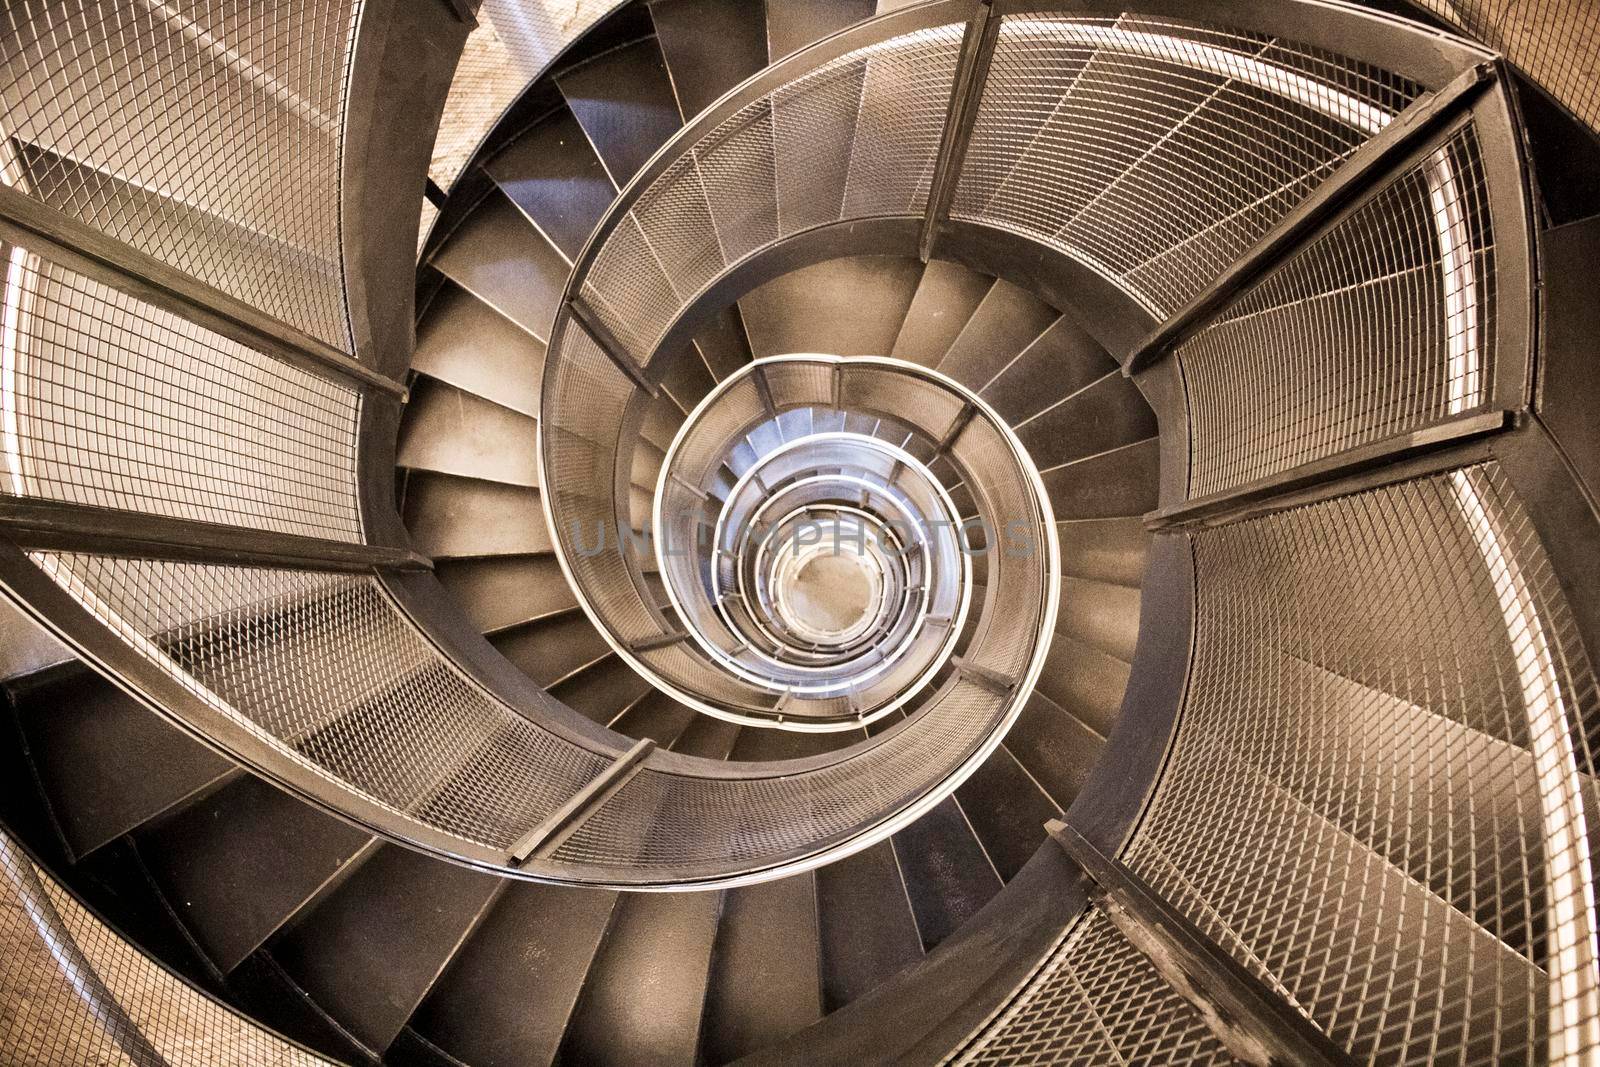 Modern spiral metallic staircase in tourist building City Tower in Innsbruck